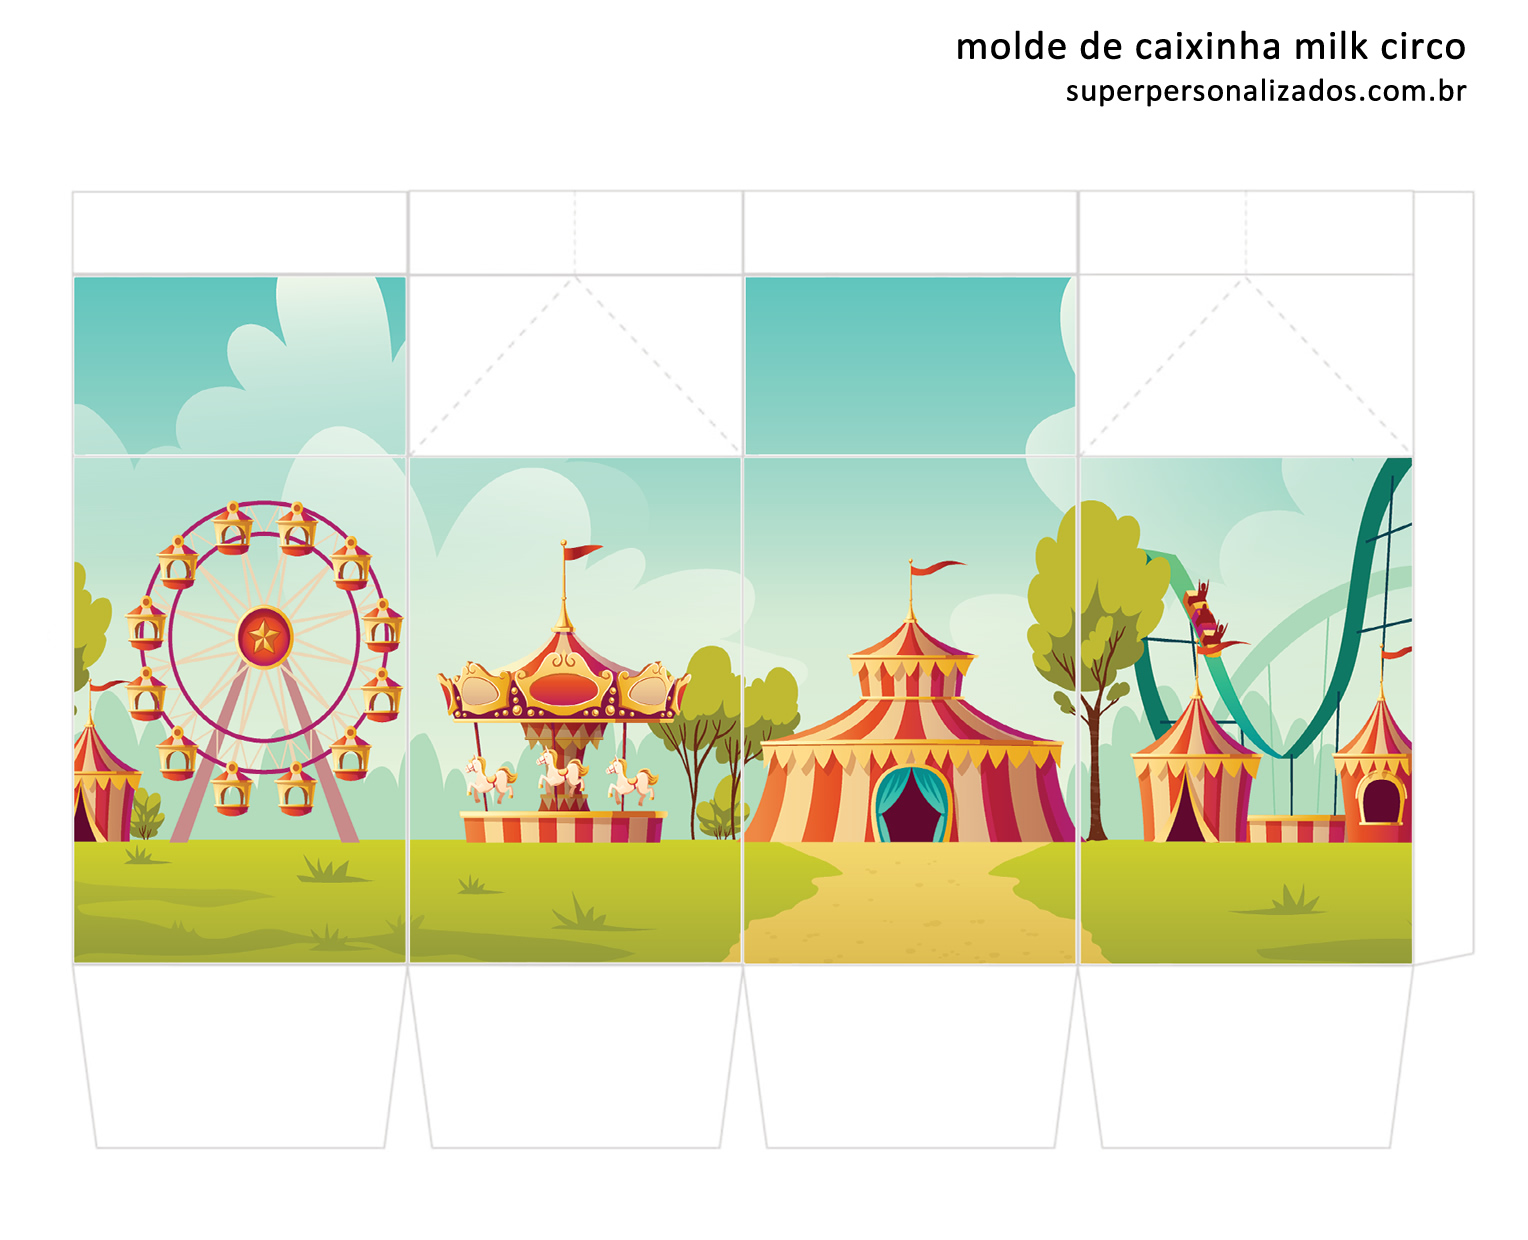 Molde de caixinha milk tema circo - Super Personalizados